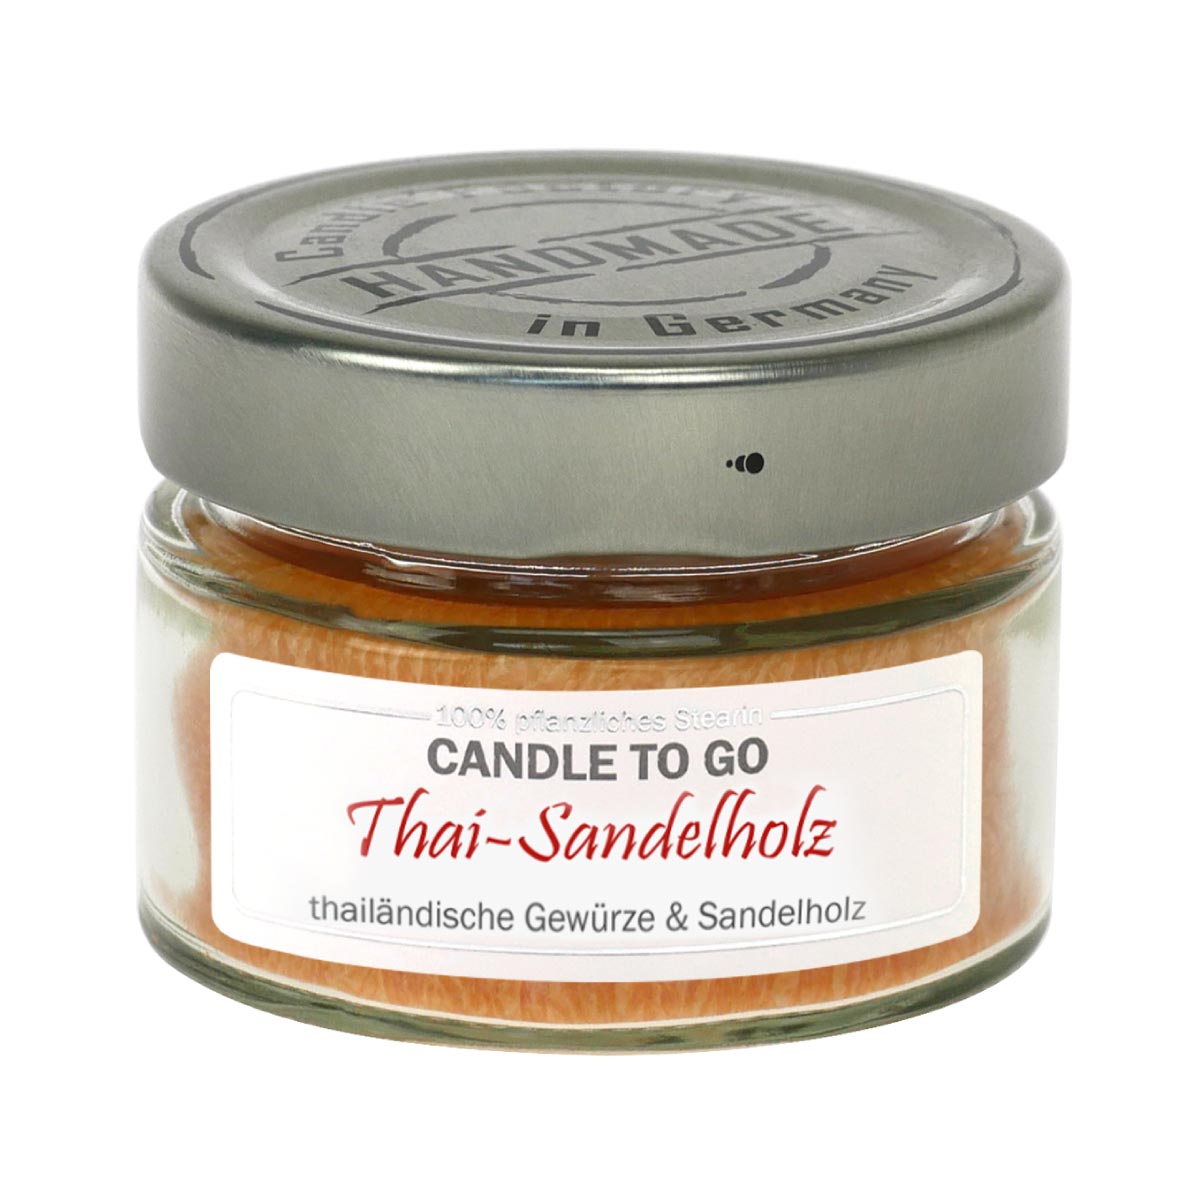 Thai Sandelholz - Candle to Go Duftkerze von Candle Factory